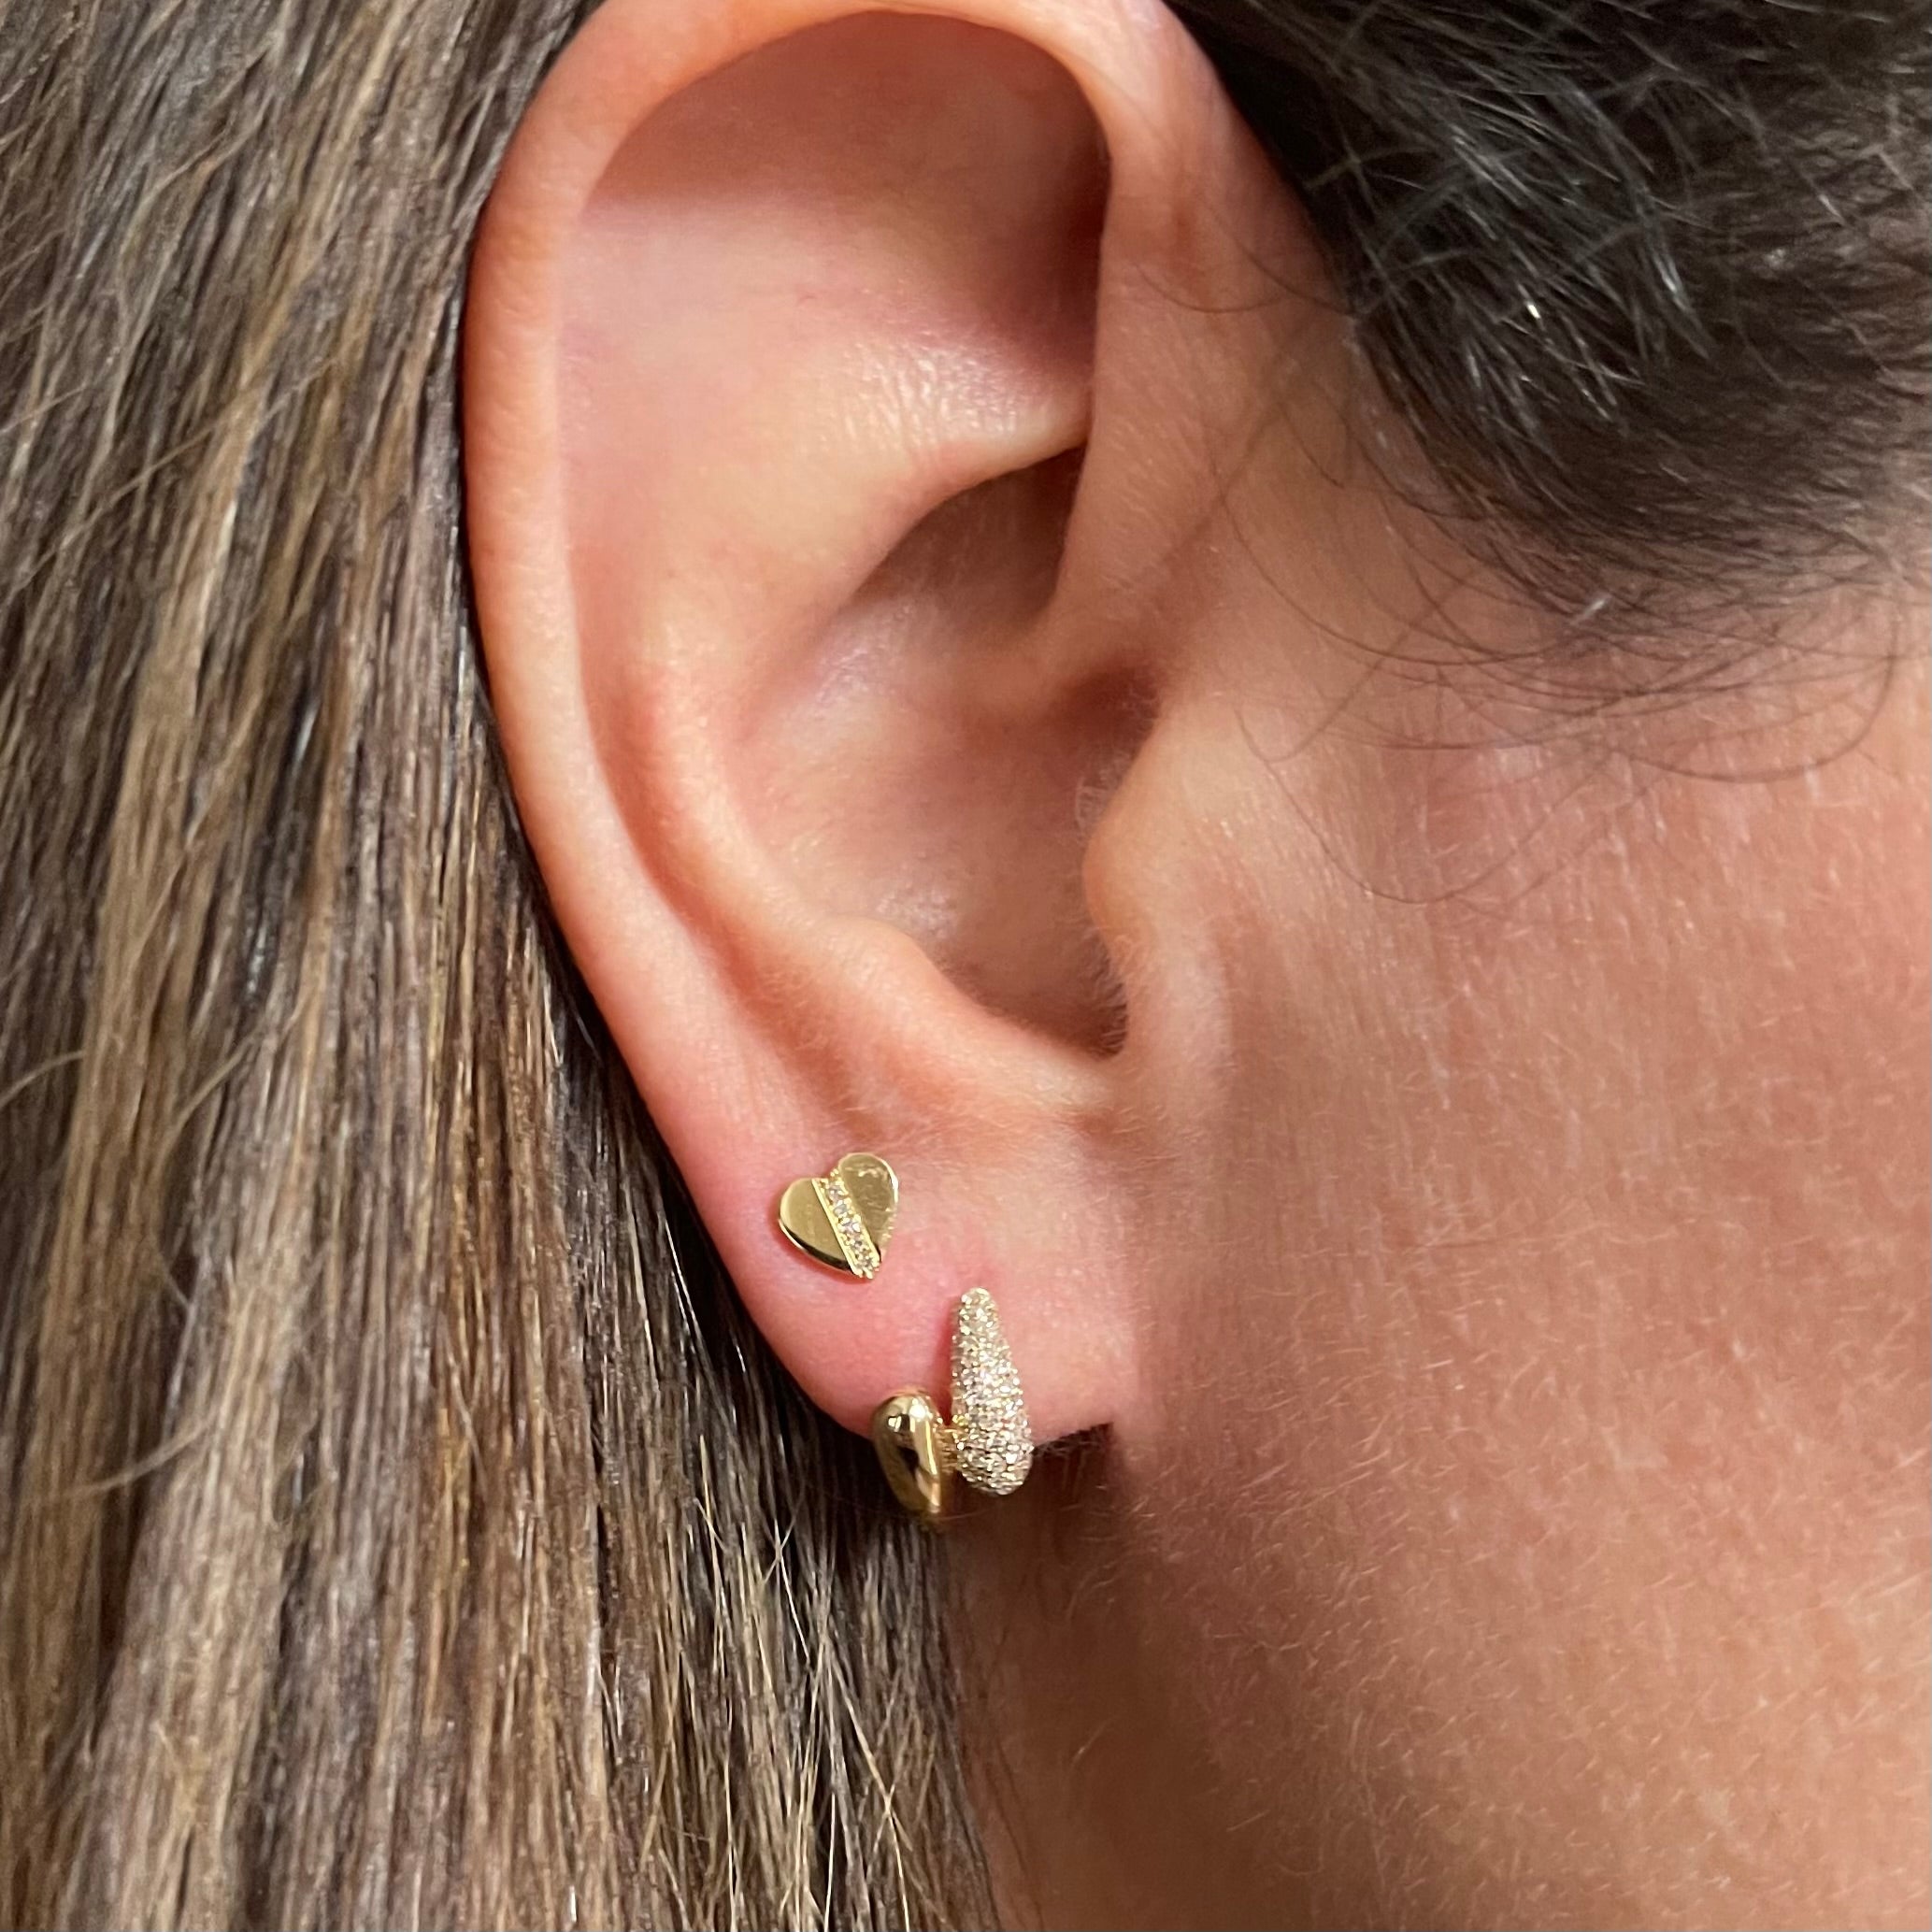 Gold With Diamond Center Heart Stud Earrings